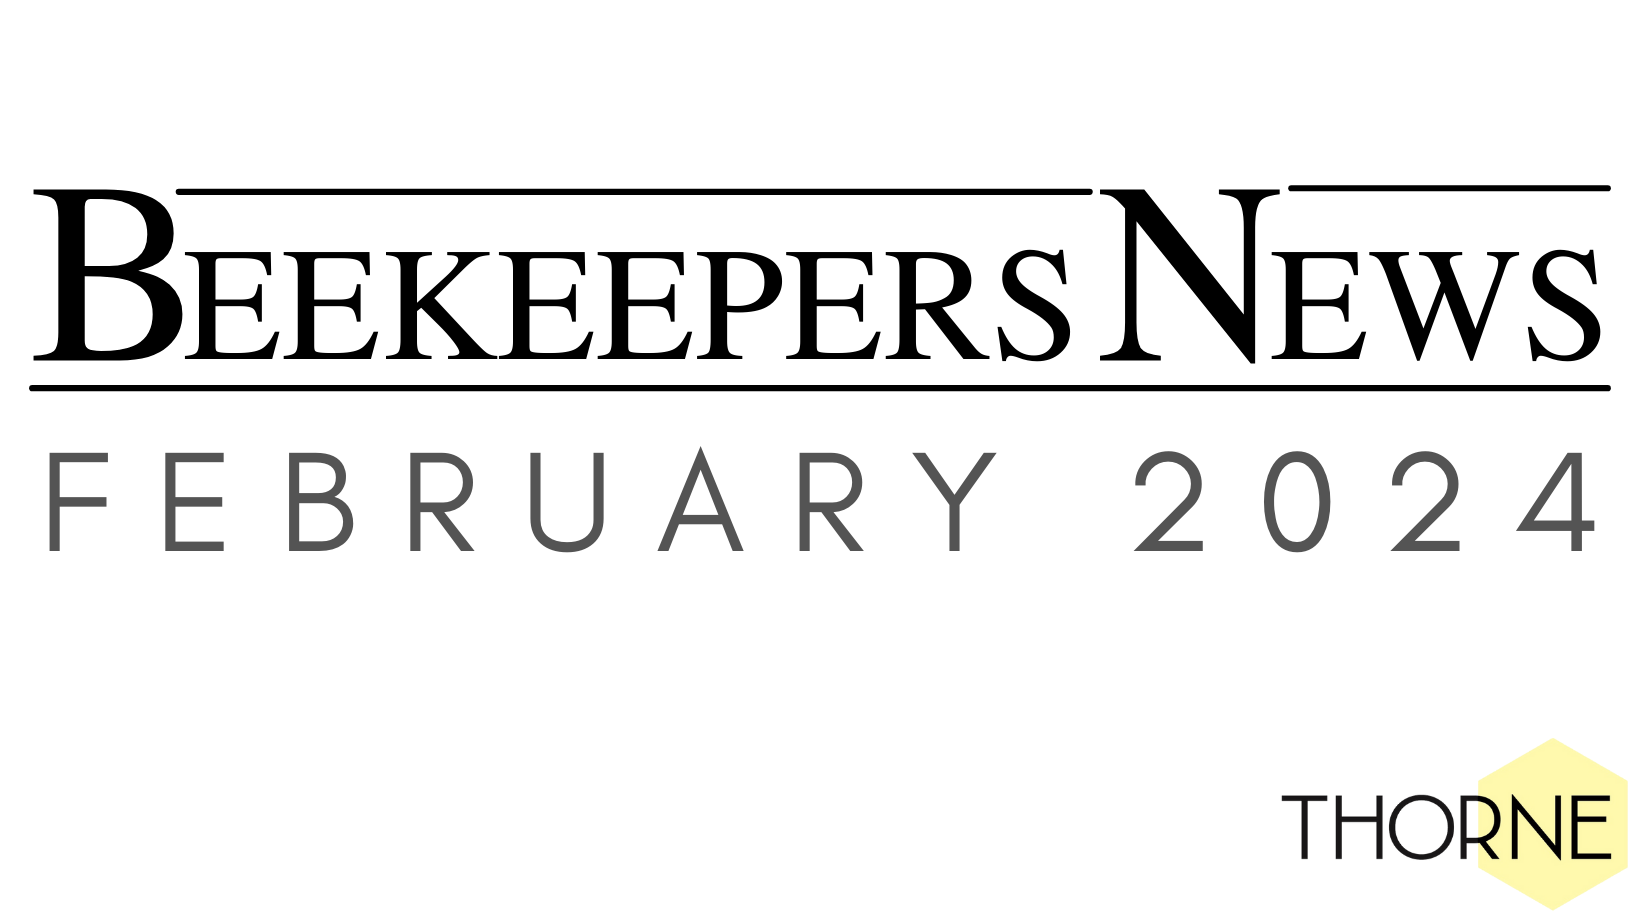 Beekeepers News - February - Issue 89